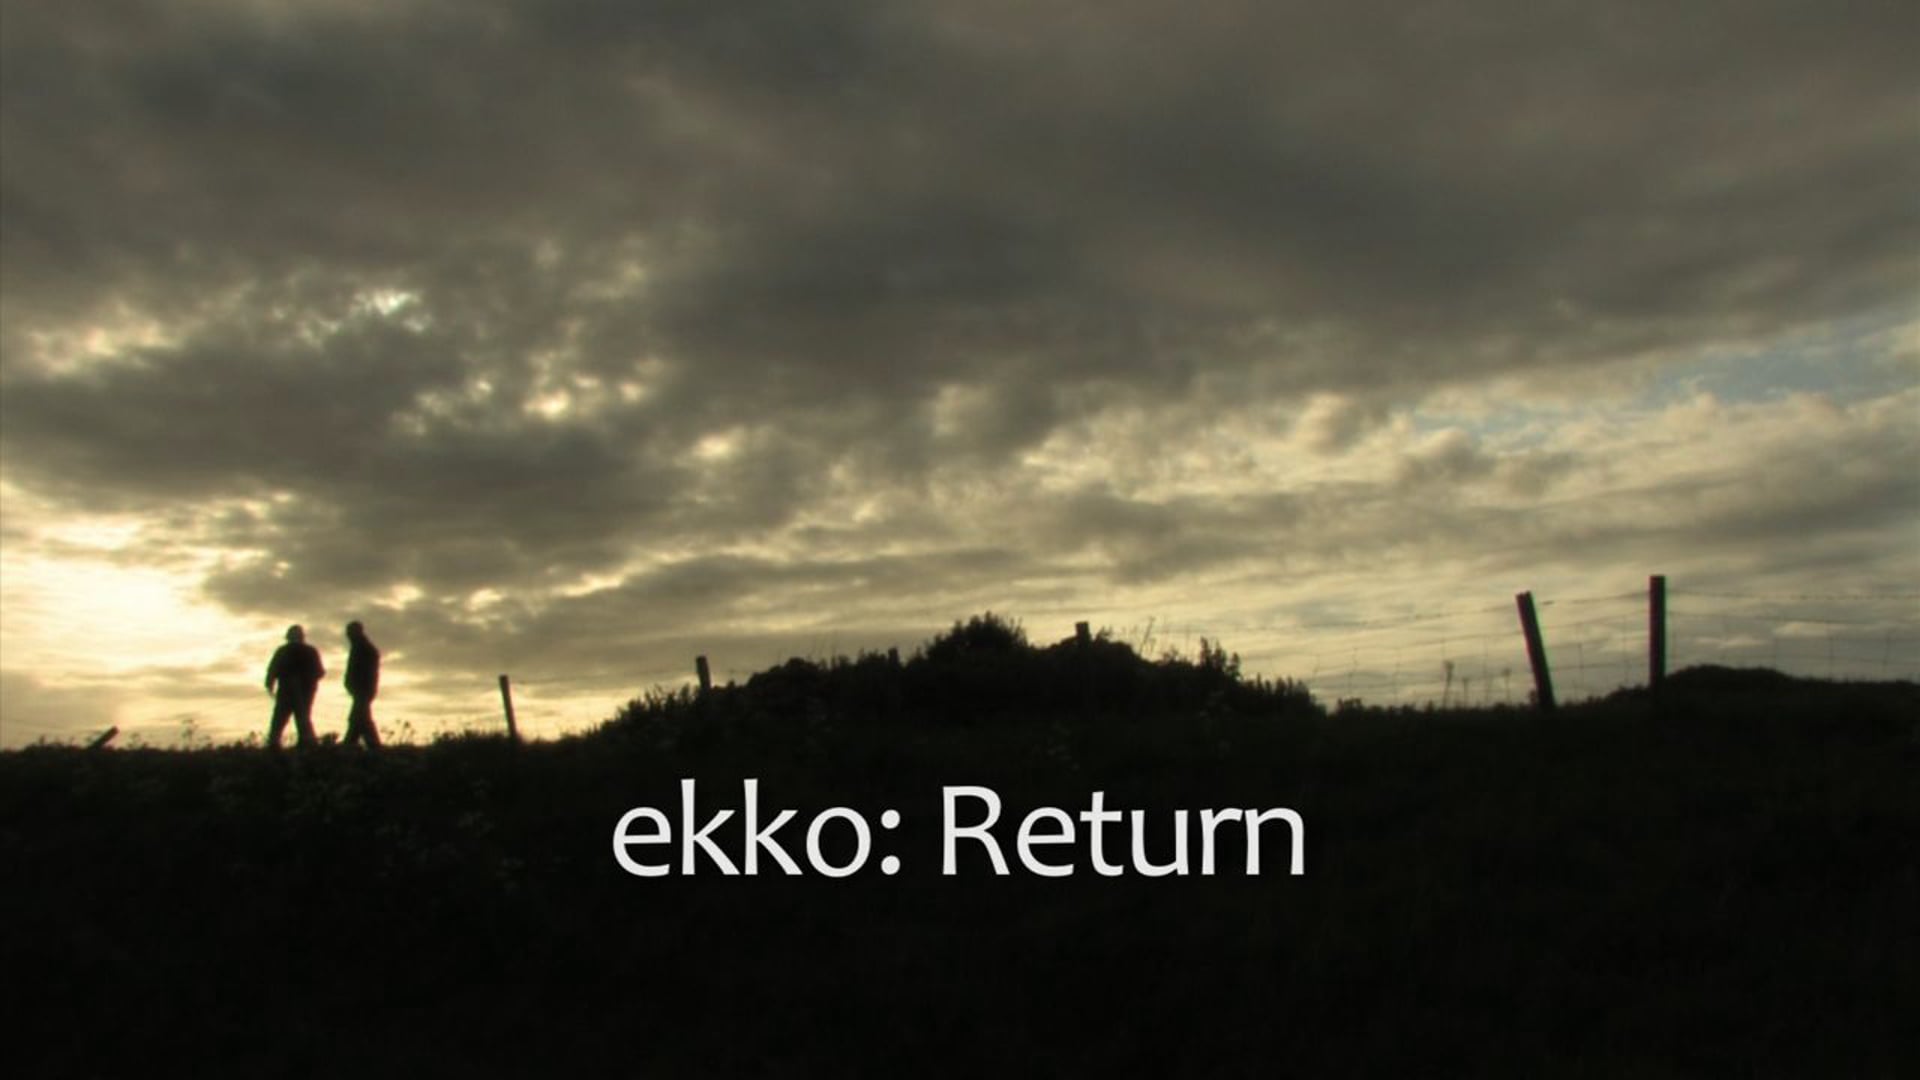 ekko: Return